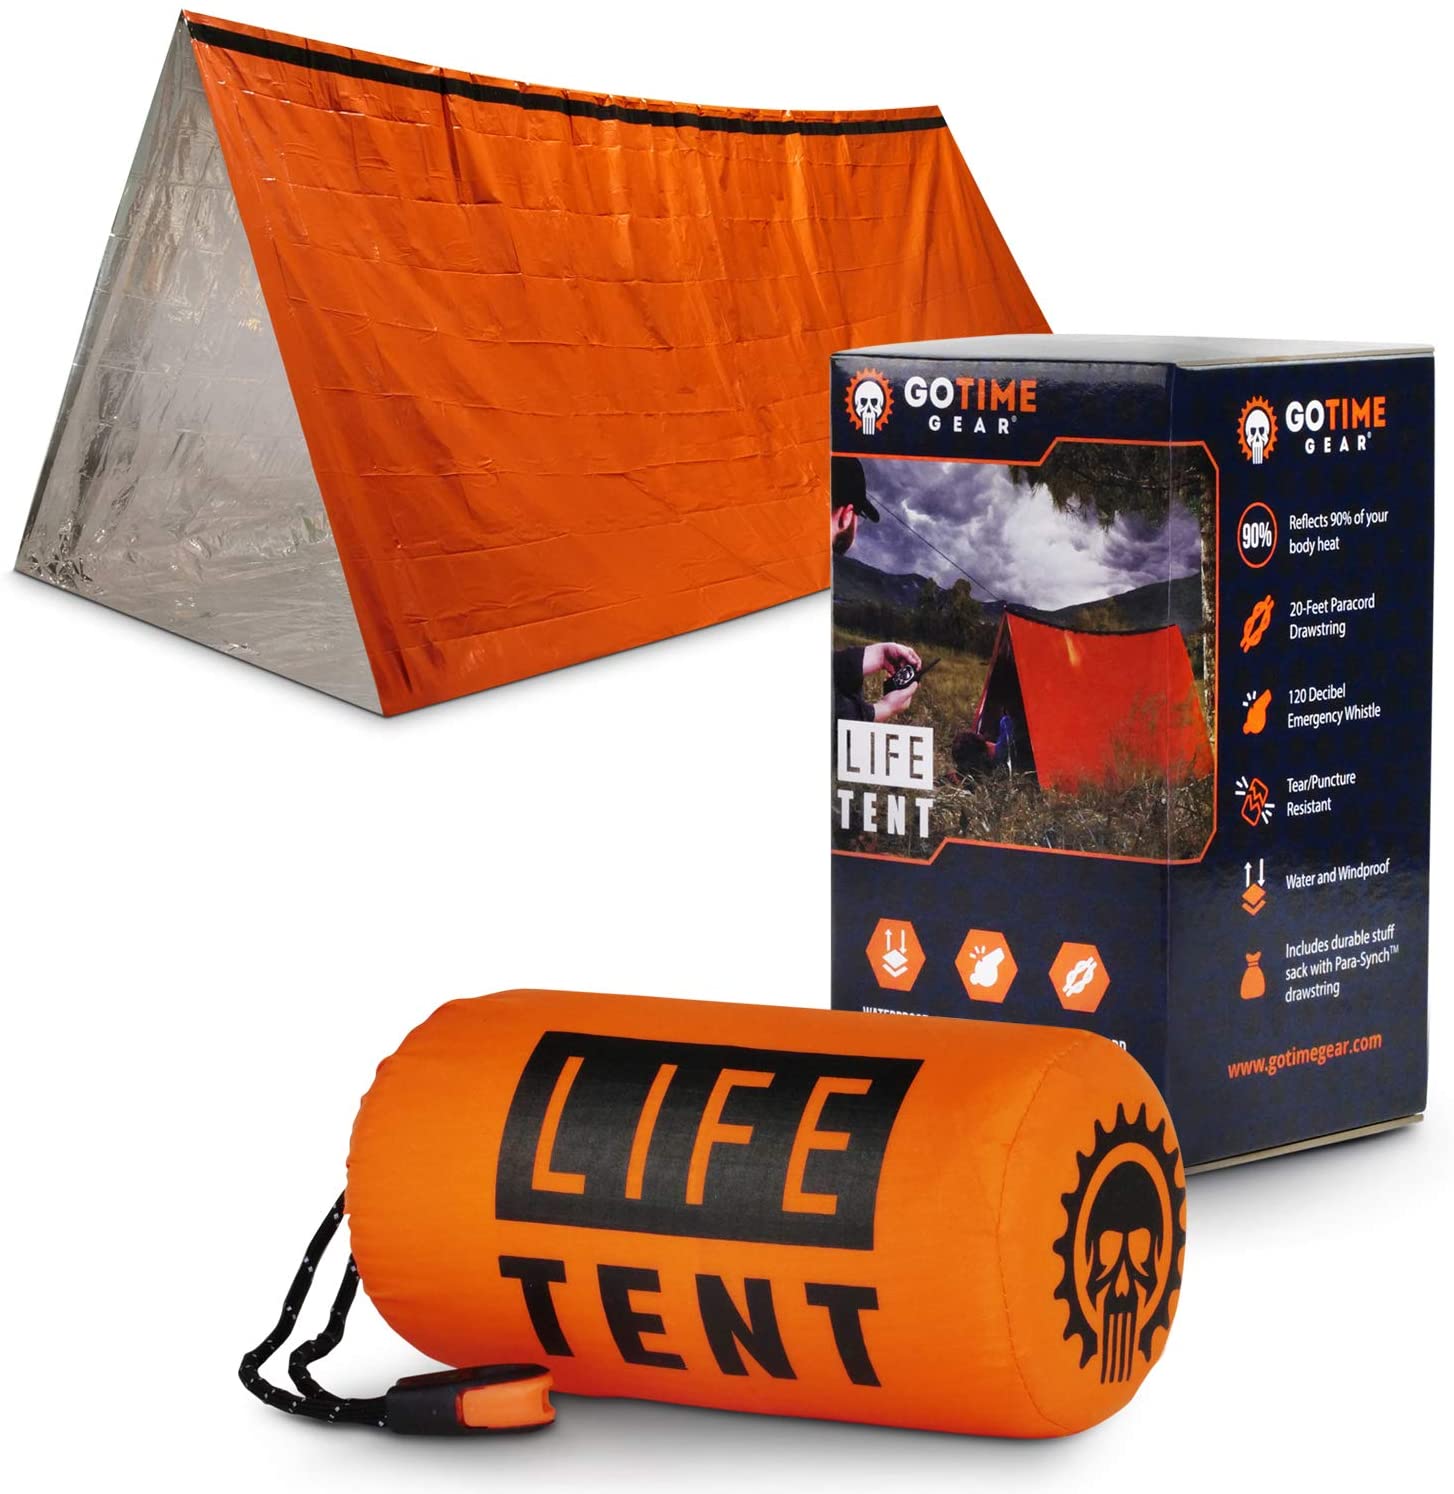 Emergency Survival Tent